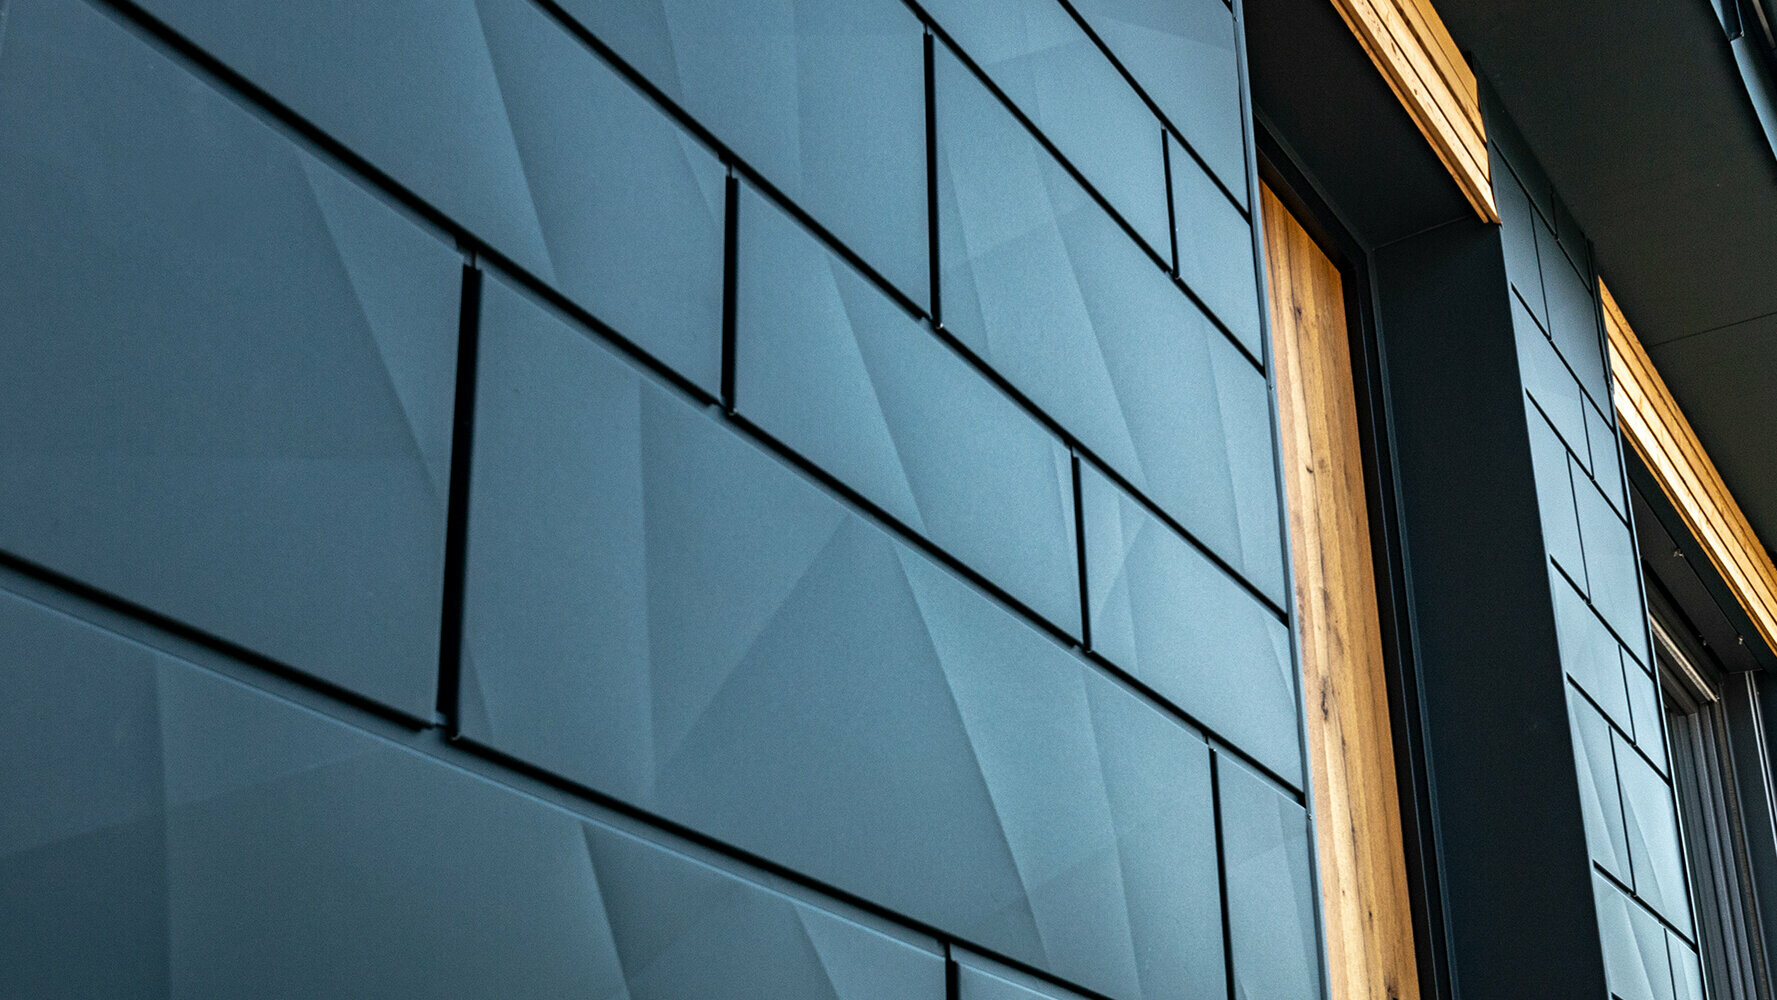 PREFA Fassadenpaneele mit geknickter Optik; PREFA Aluminium Siding.X in Anthrazit mit Holzfassade kombiniert.